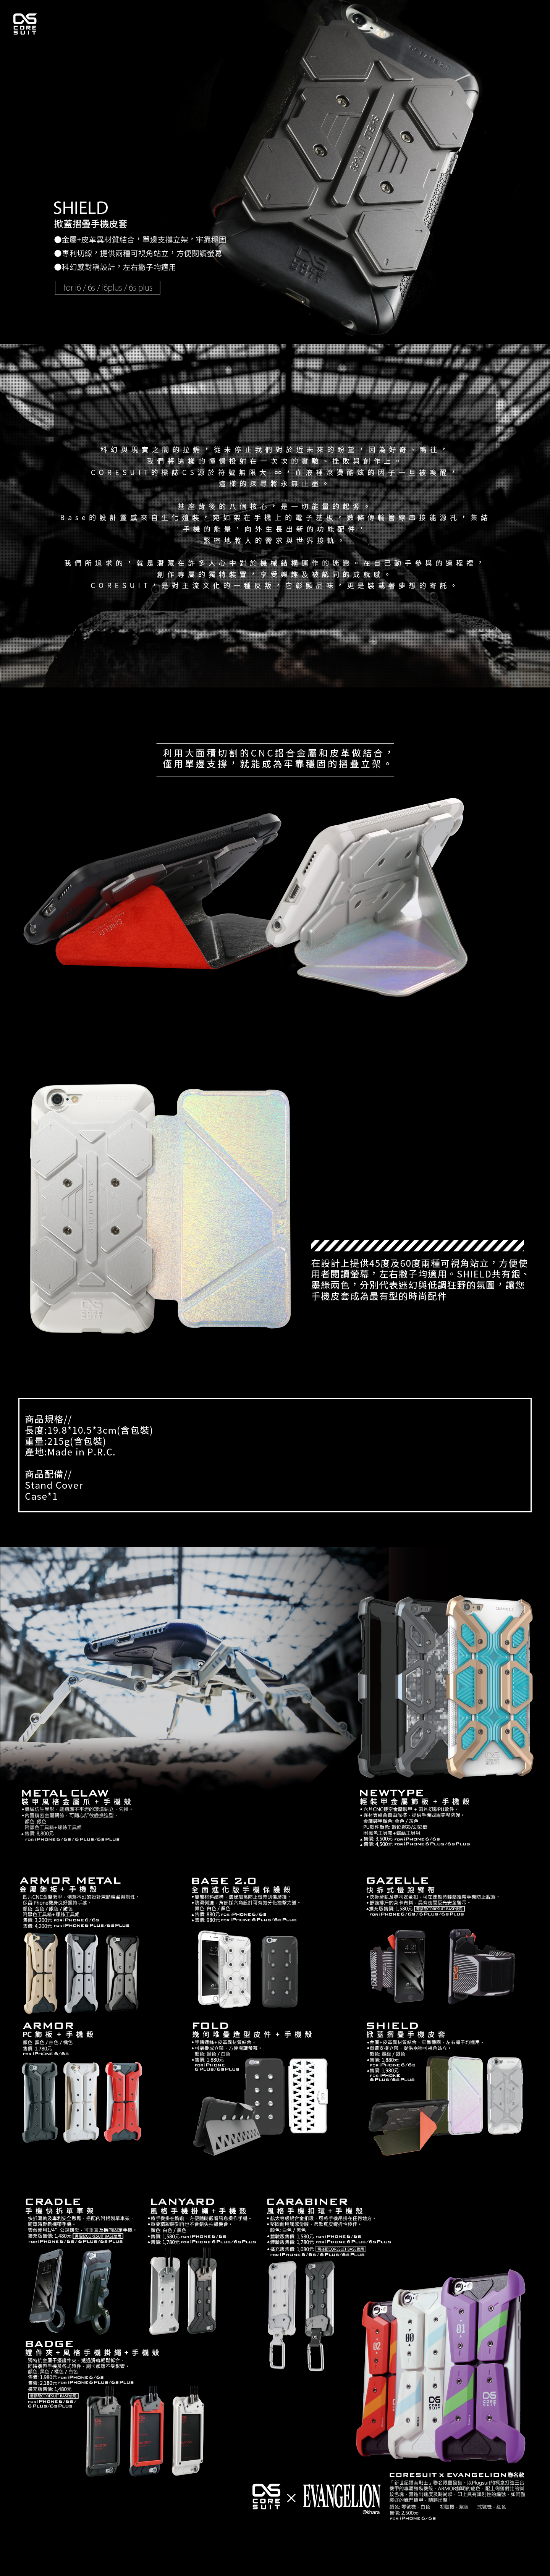 CORESUIT SHIELD掀蓋摺疊手機皮套 iPhone 6/6s 白